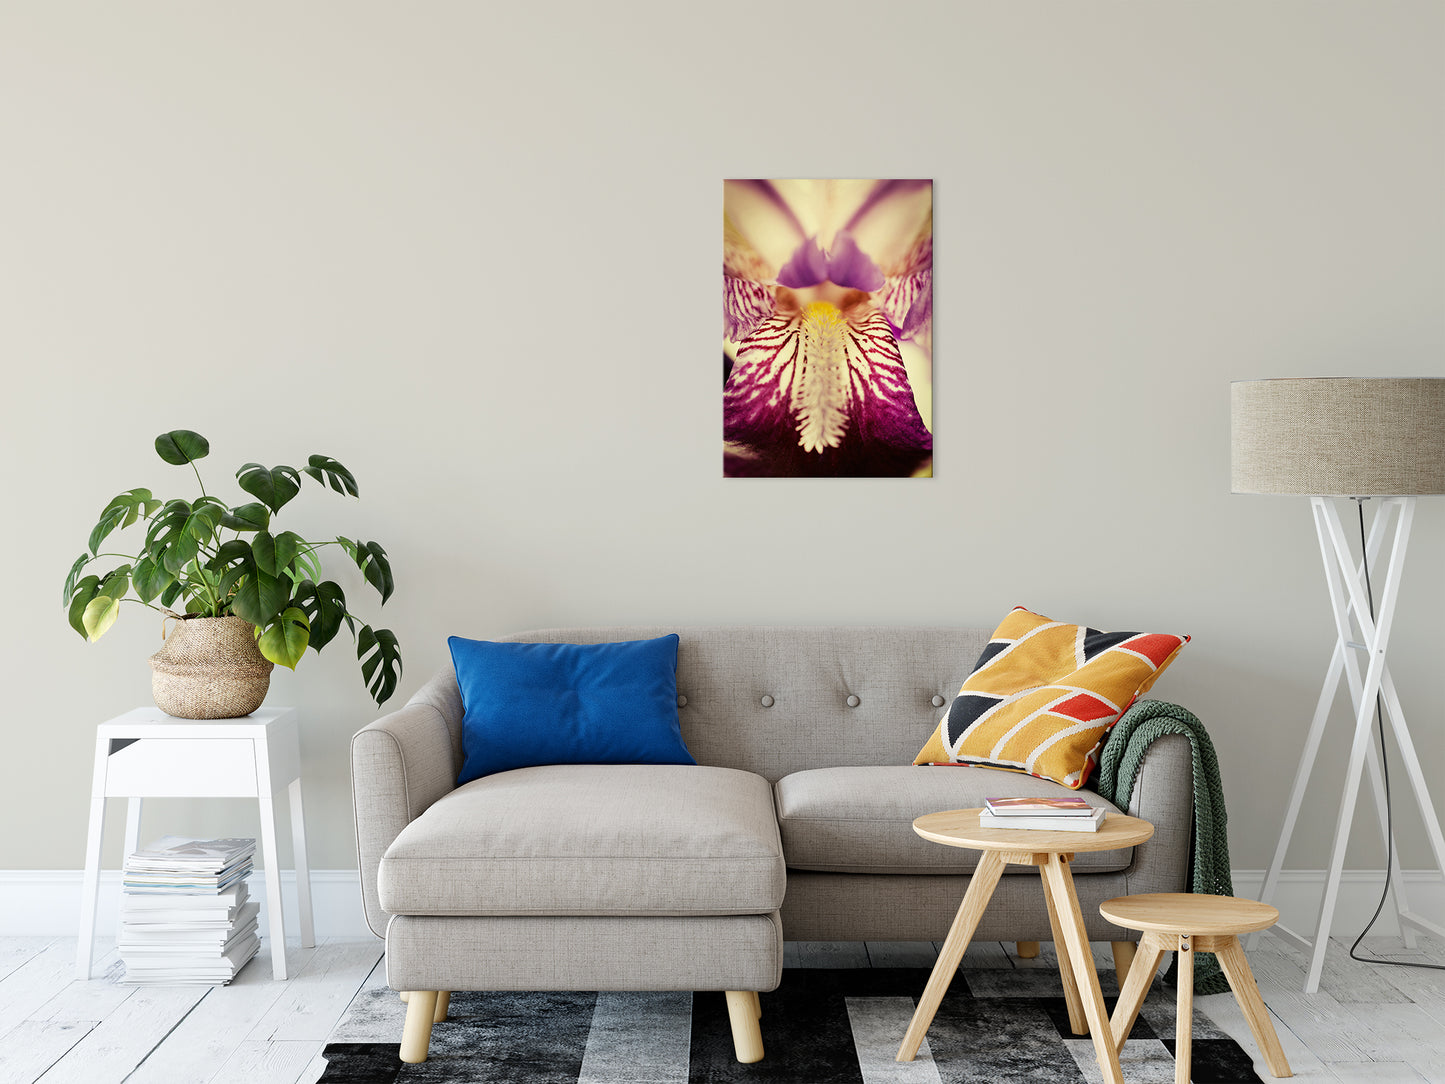 Inspirational Canvas Wall Art: Antiqued Purple Iris Flower Nature / Floral Photo Fine Art Canvas Wall Art Prints 20" x 30" - PIPAFINEART